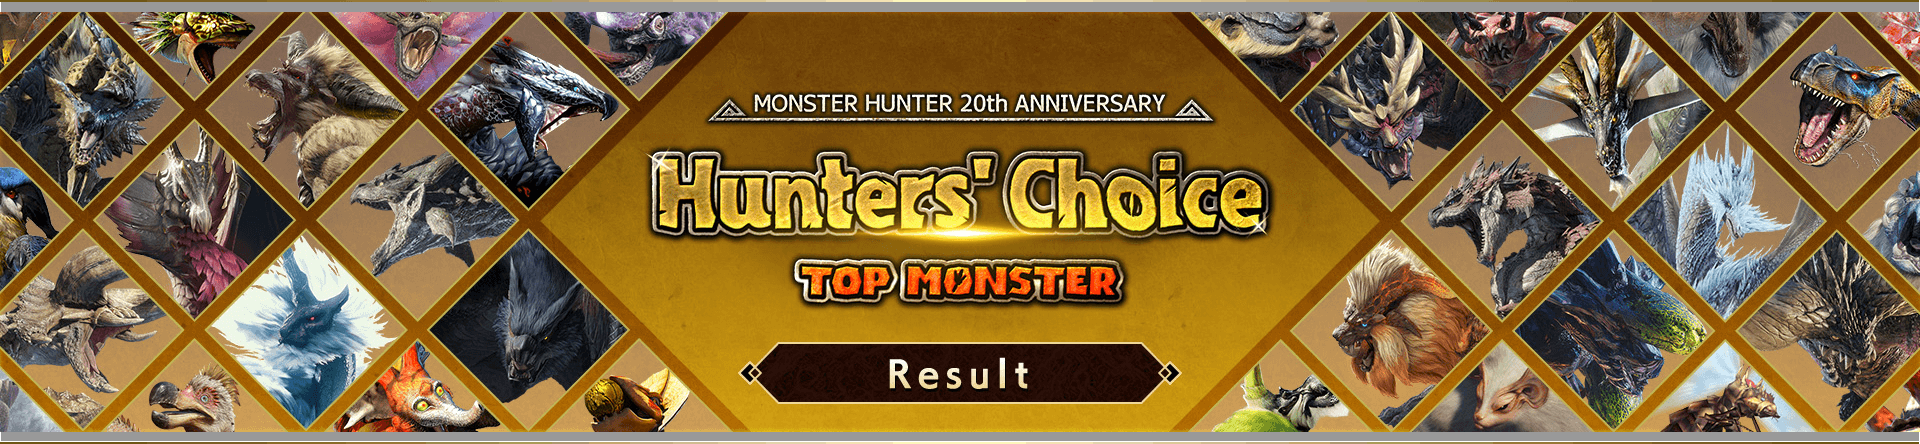 MONSTER HUNTER 20th ANNIVERSARY Hunters' Choice (Top Monster)